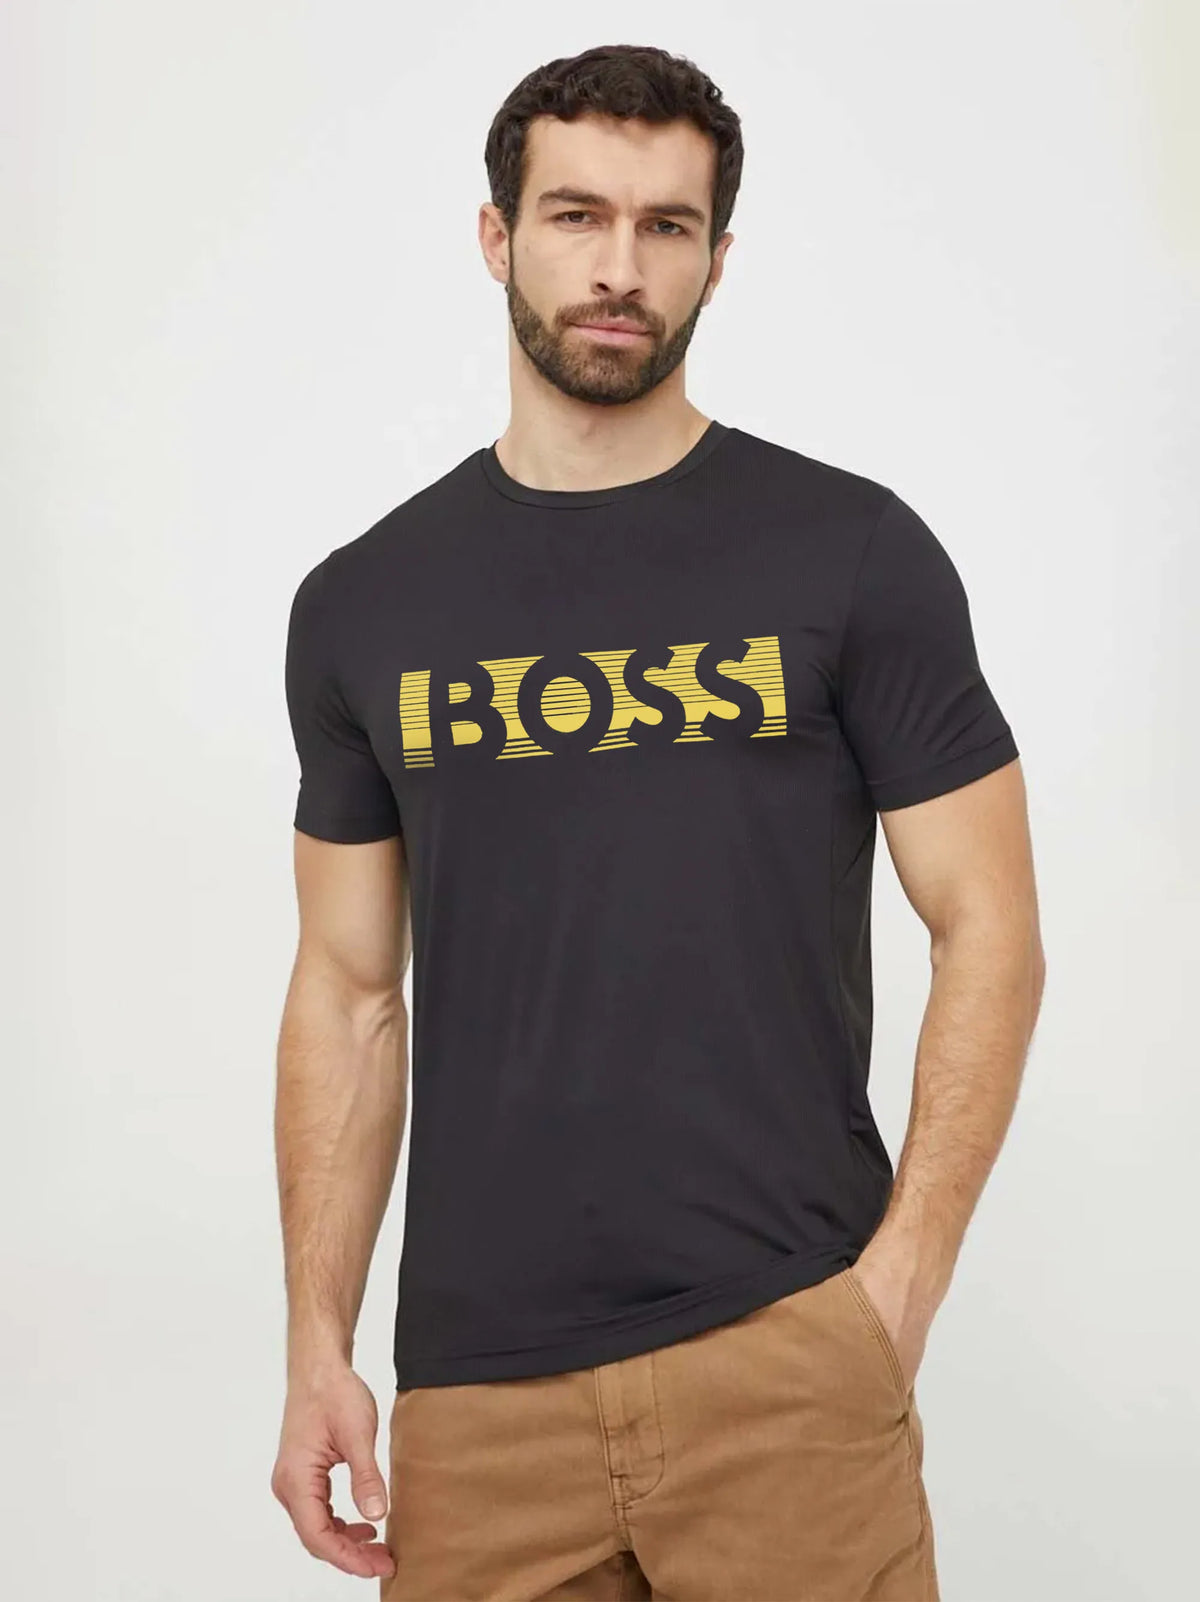 Boss Monogram Crew Neck Black T-shirt